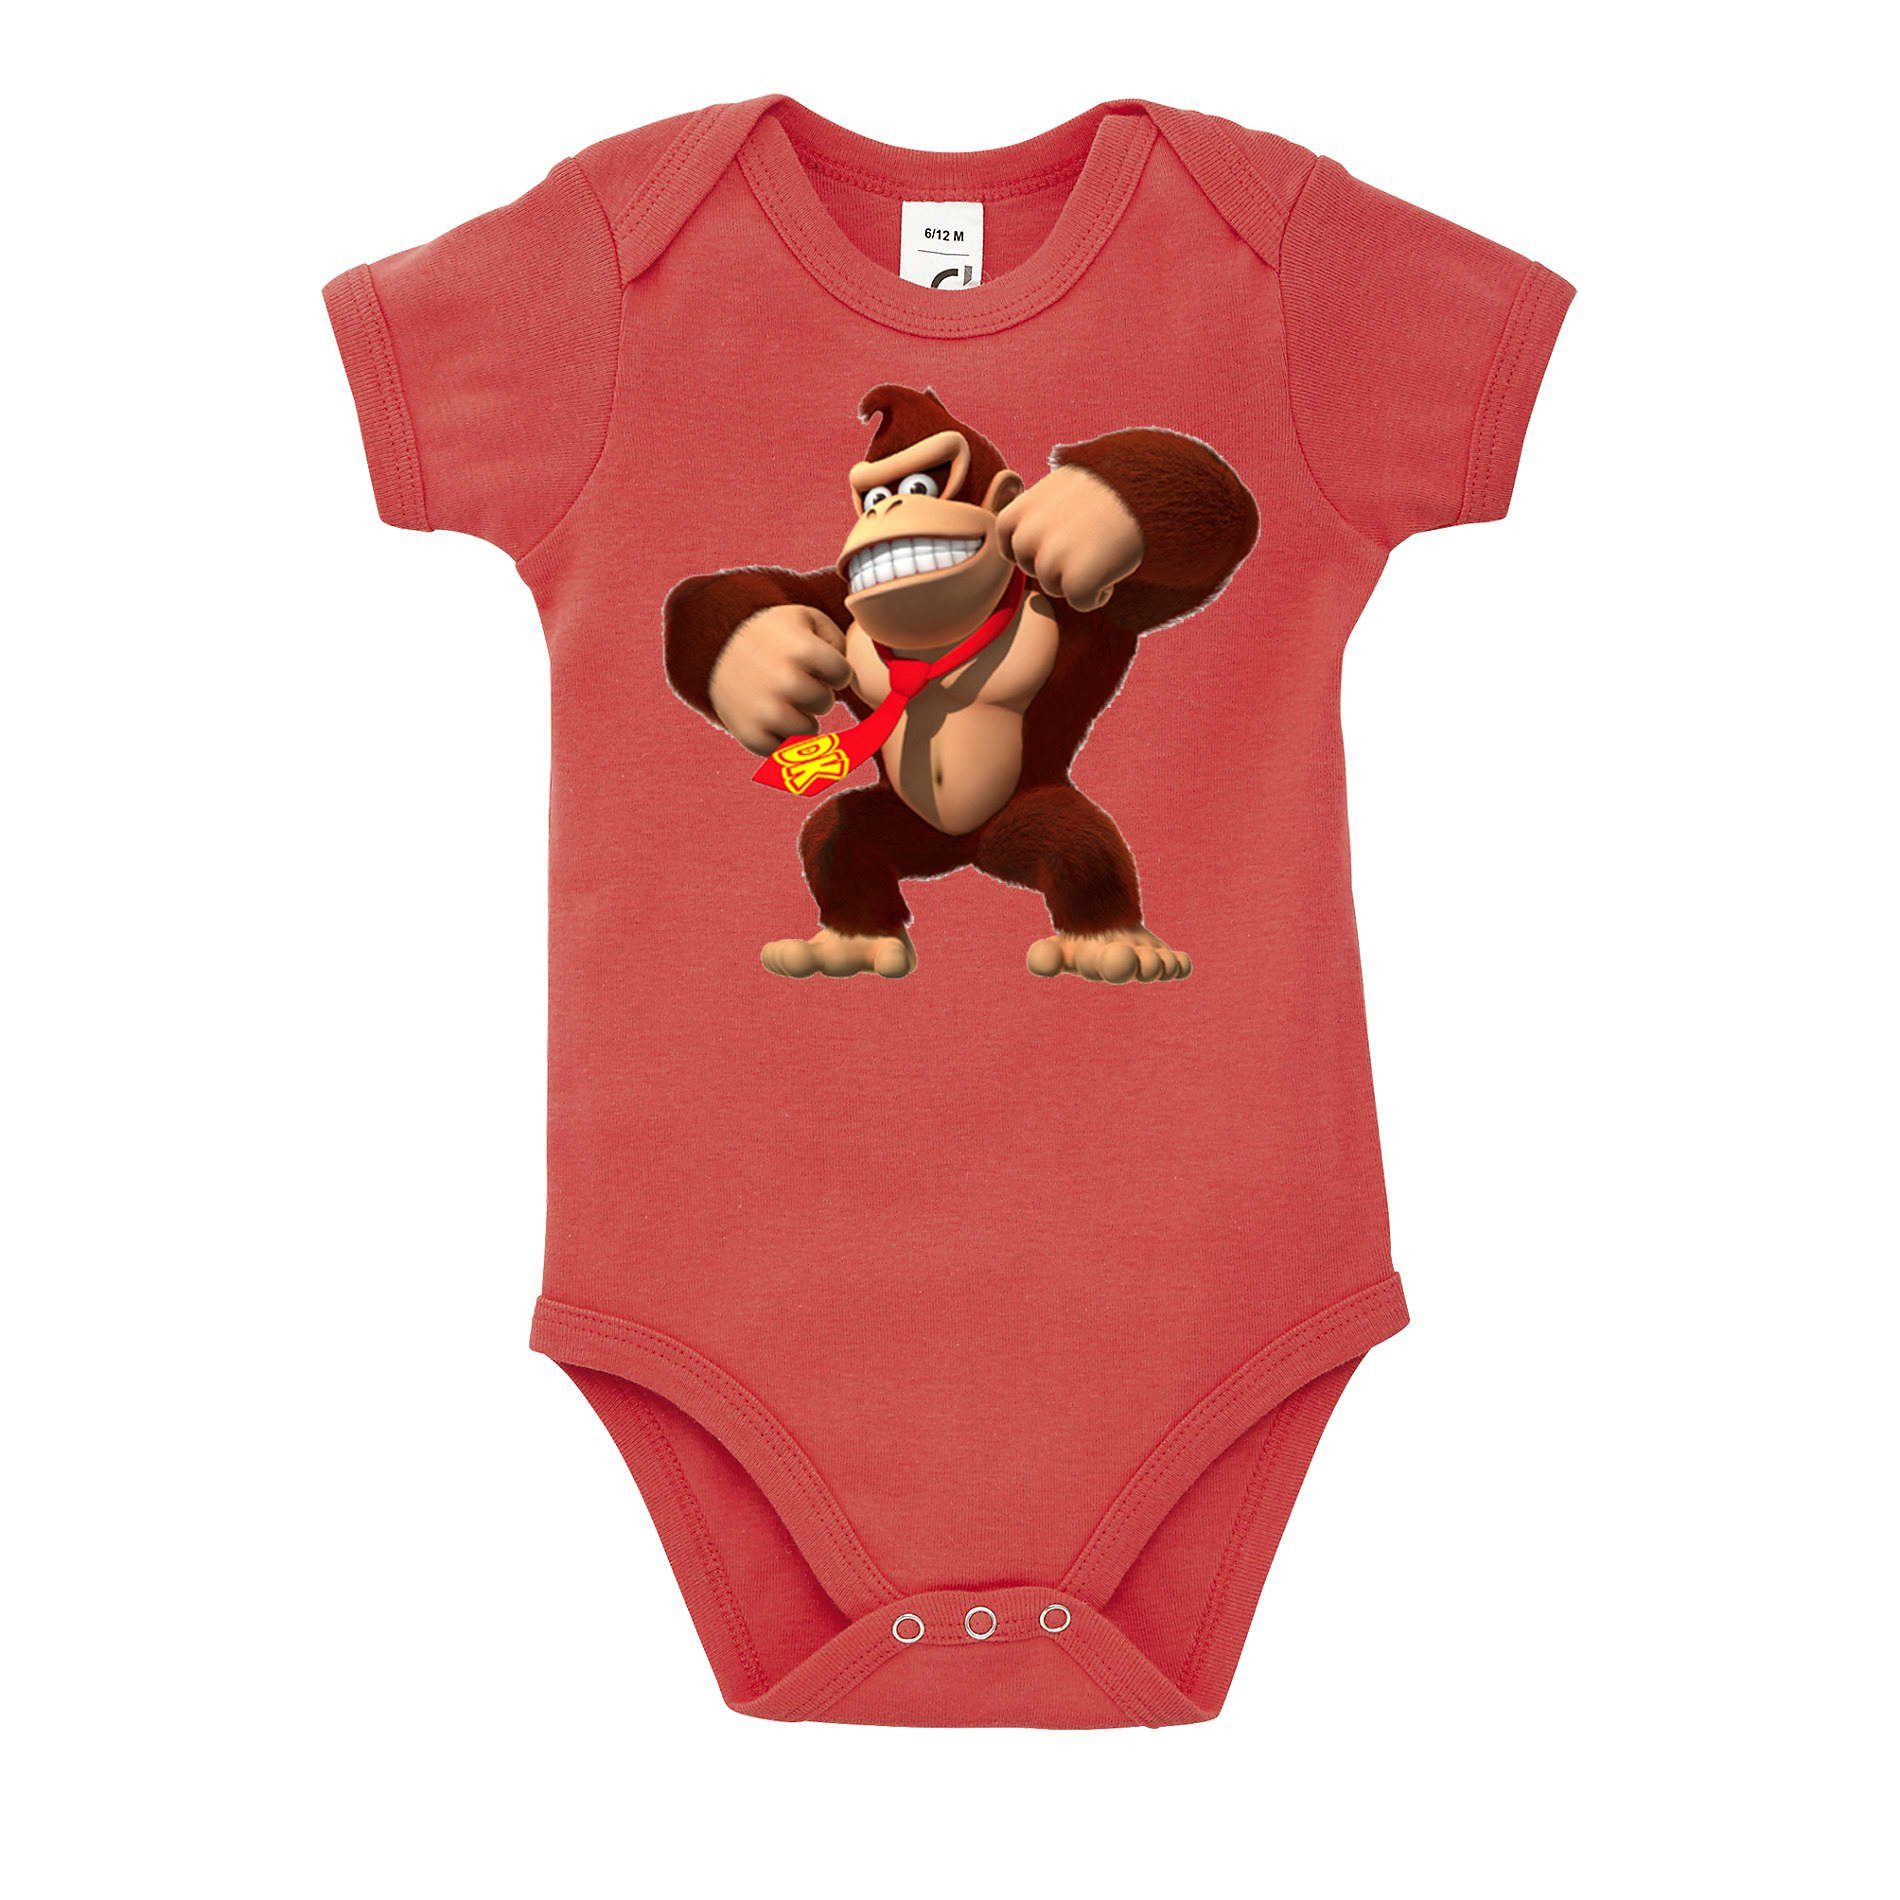 Blondie & Brownie Strampler Kinder Baby Donkey Kong Gorilla Affe Nintendo mit Druckknopf Rot